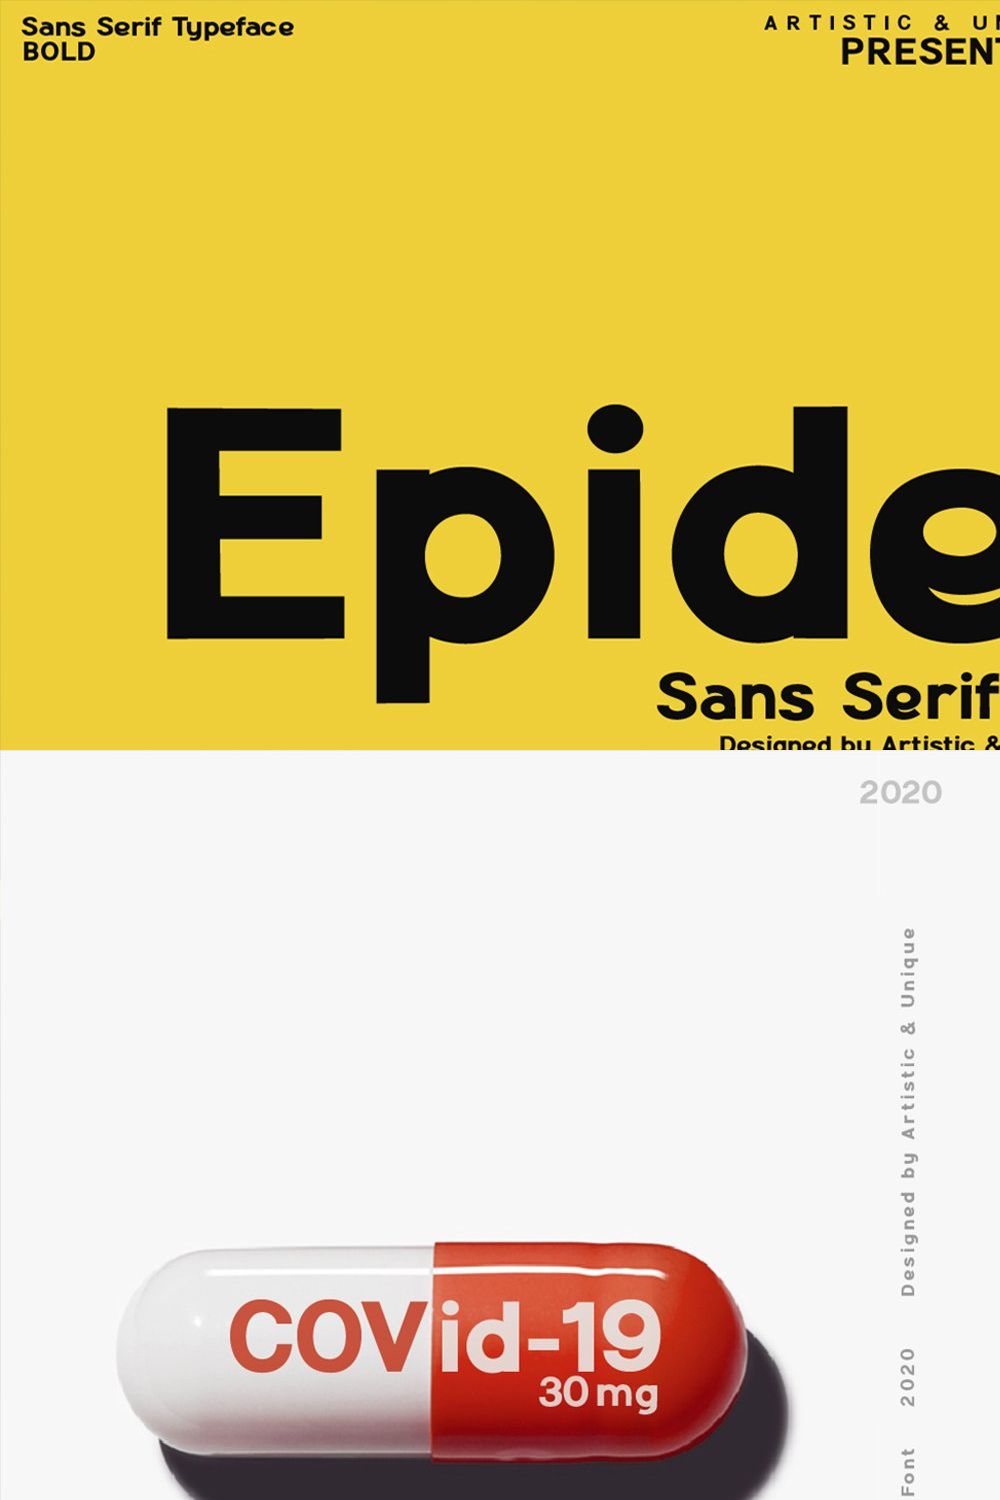 Epidemia - Sans Serif Font Family pinterest preview image.